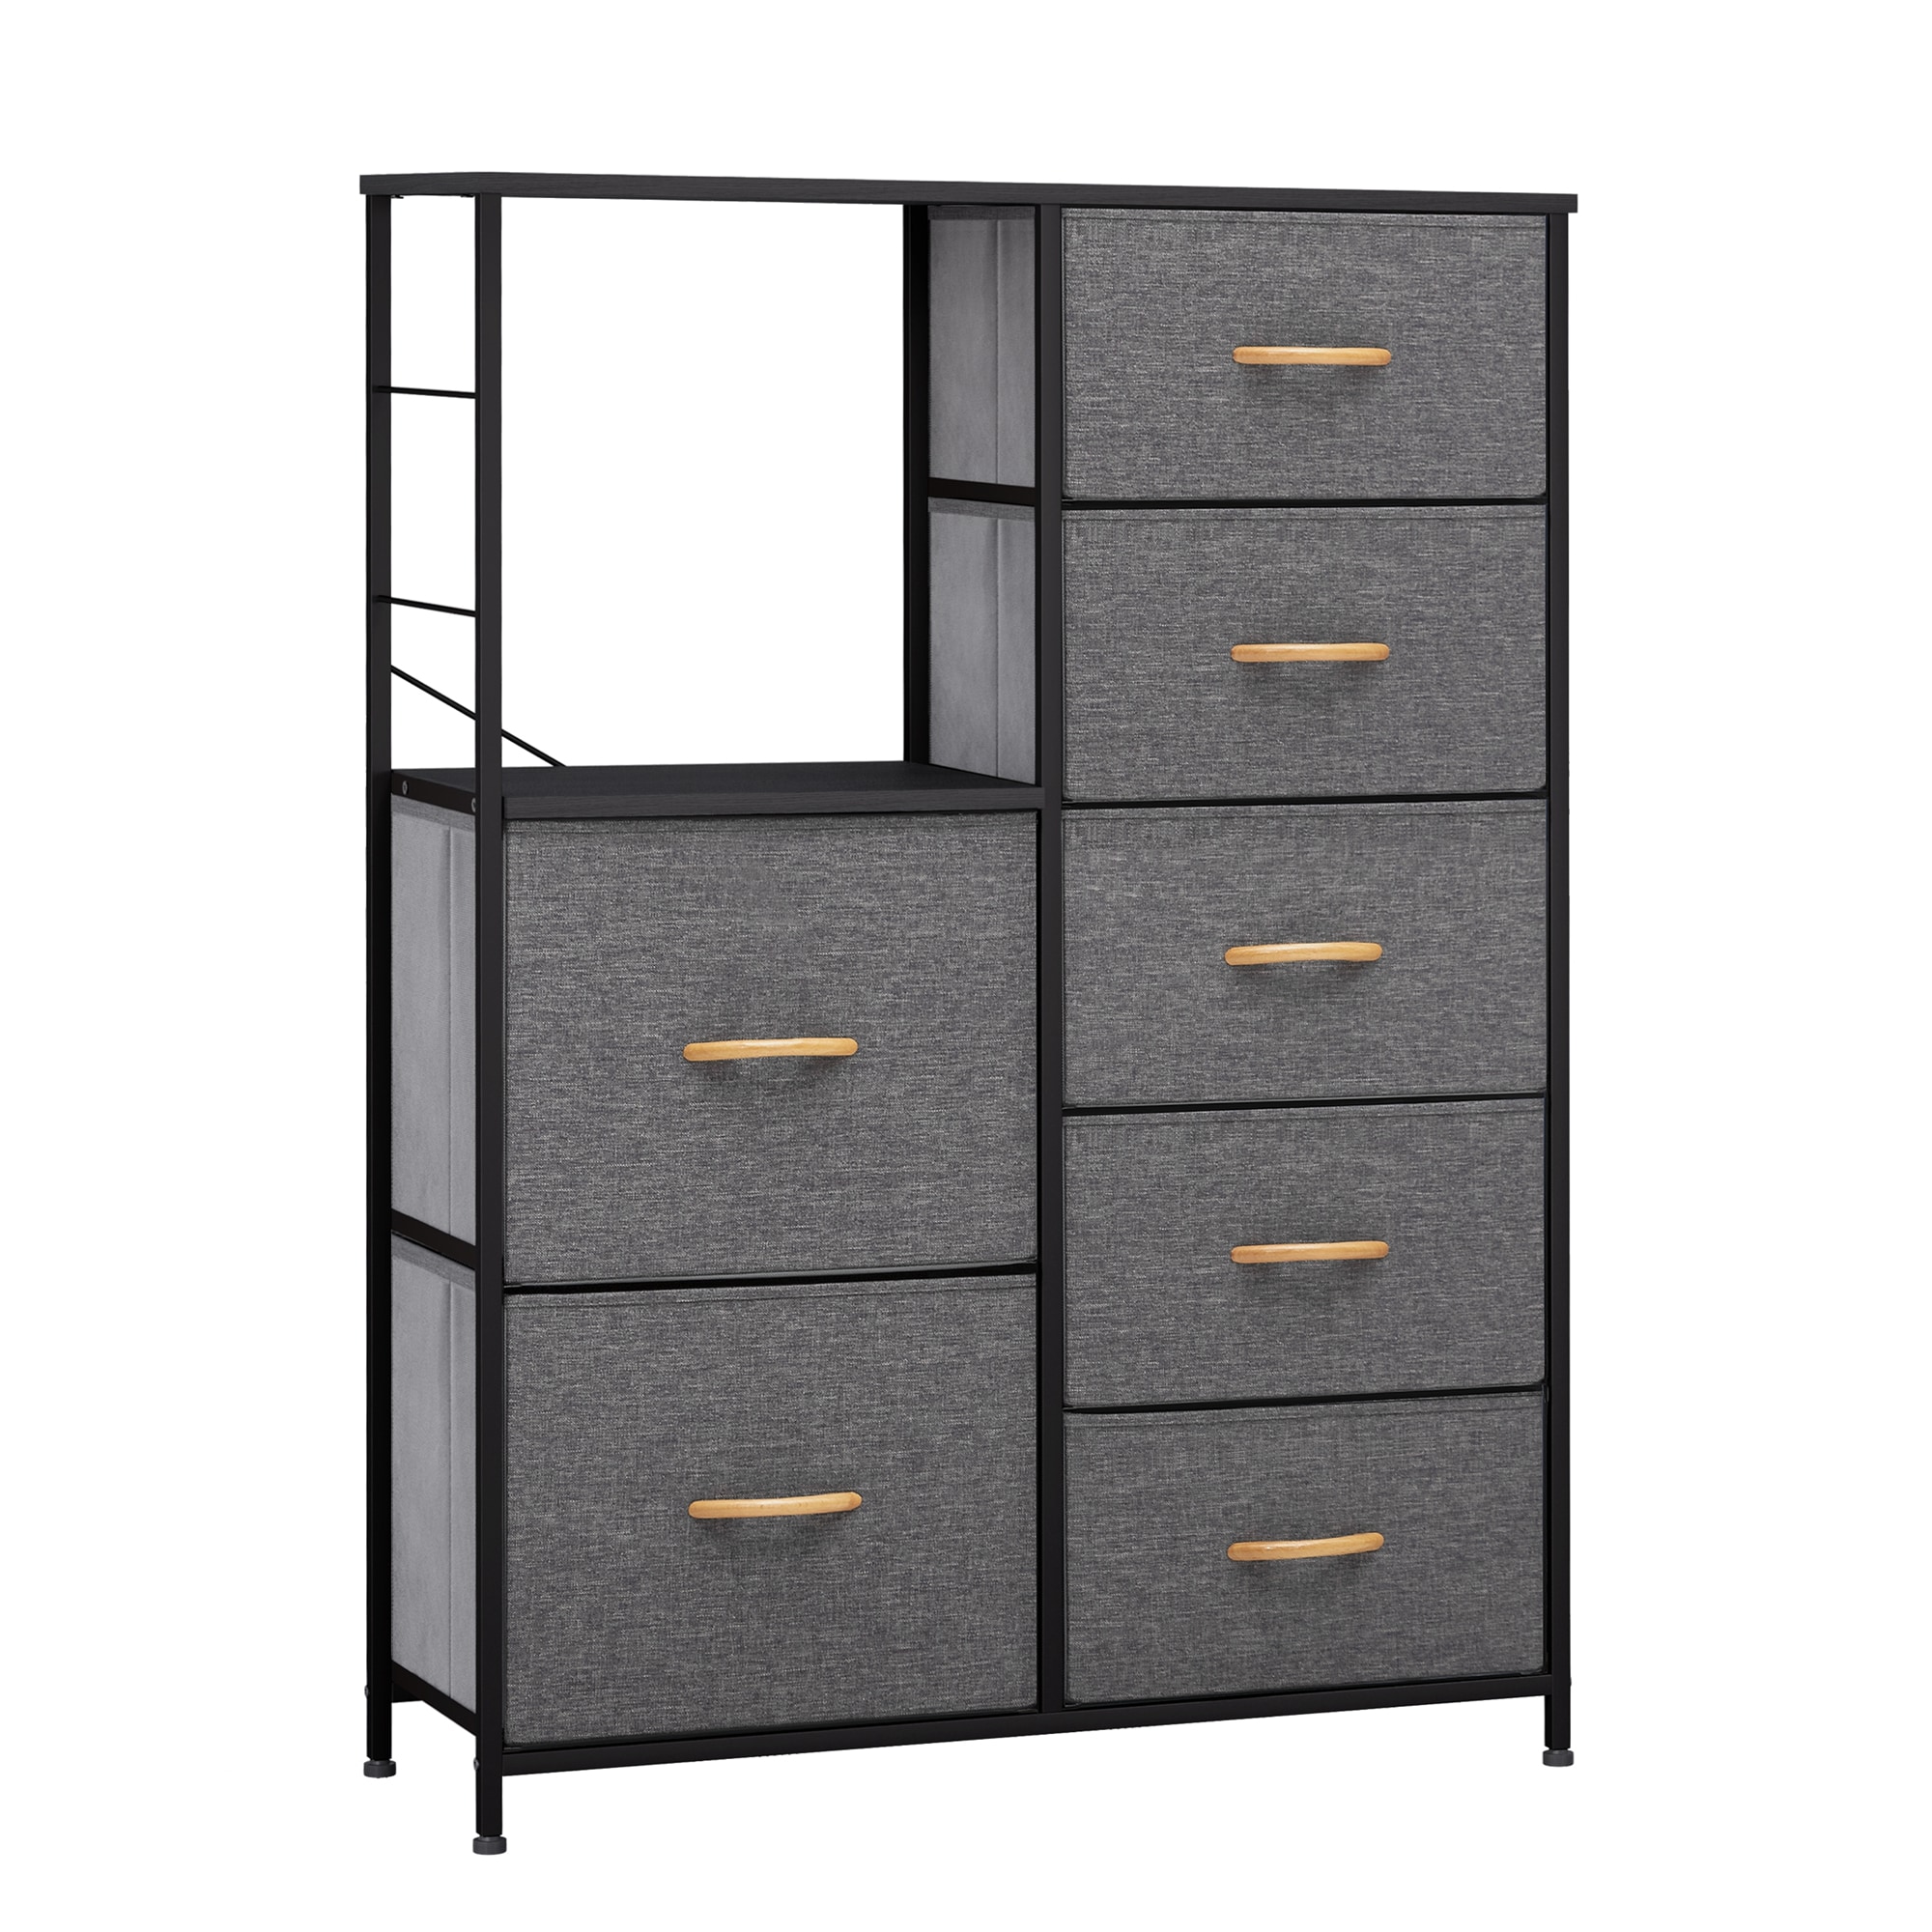 New 4 Drawer Chest Dresser Clothes Storage Bedroom Furniture Cabinet Black 